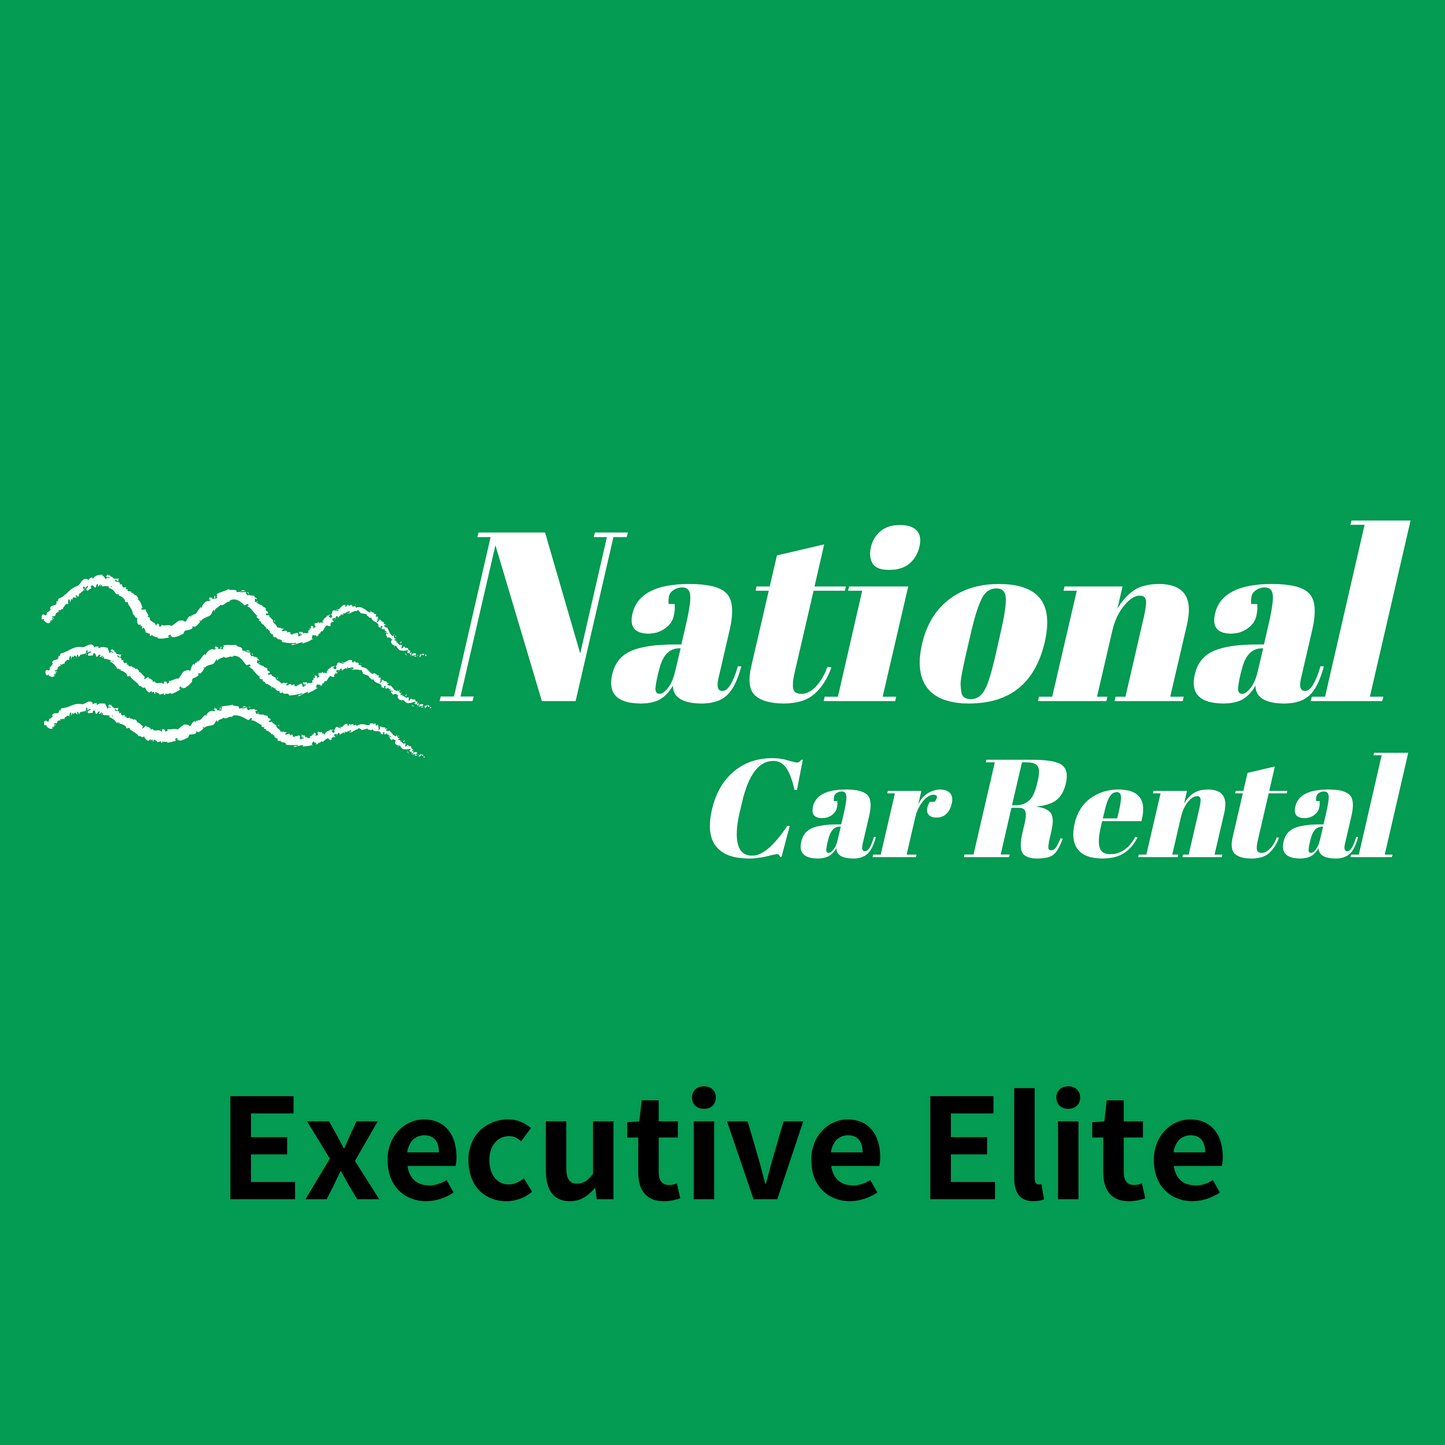 National Car Rental Executive Elite